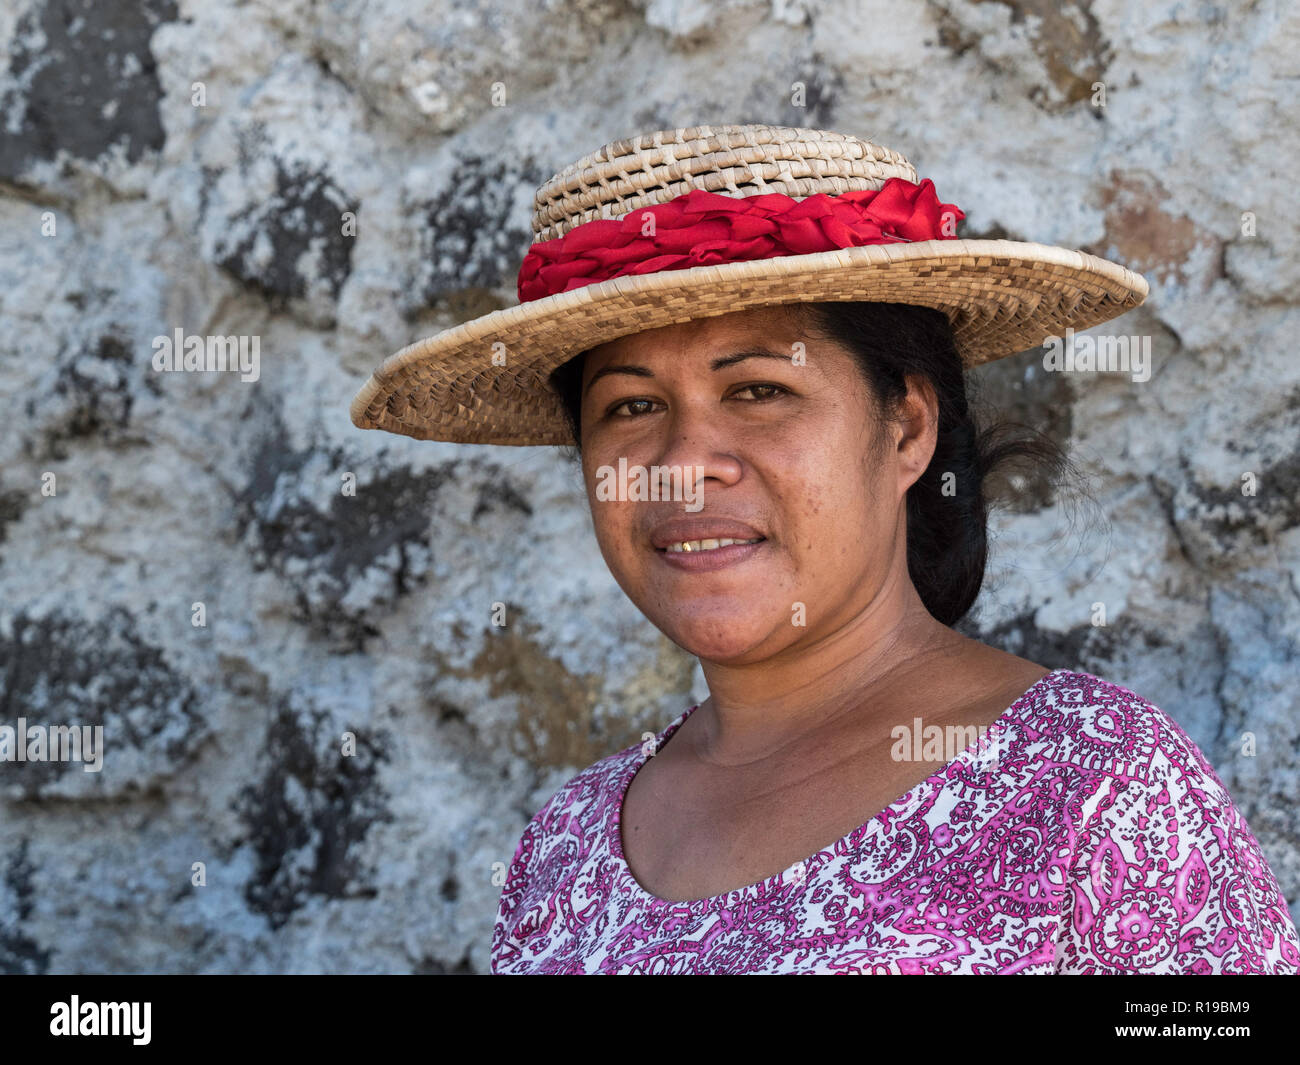 Local woman on the island of Savai'i, the largest island in Samoa. Stock Photo